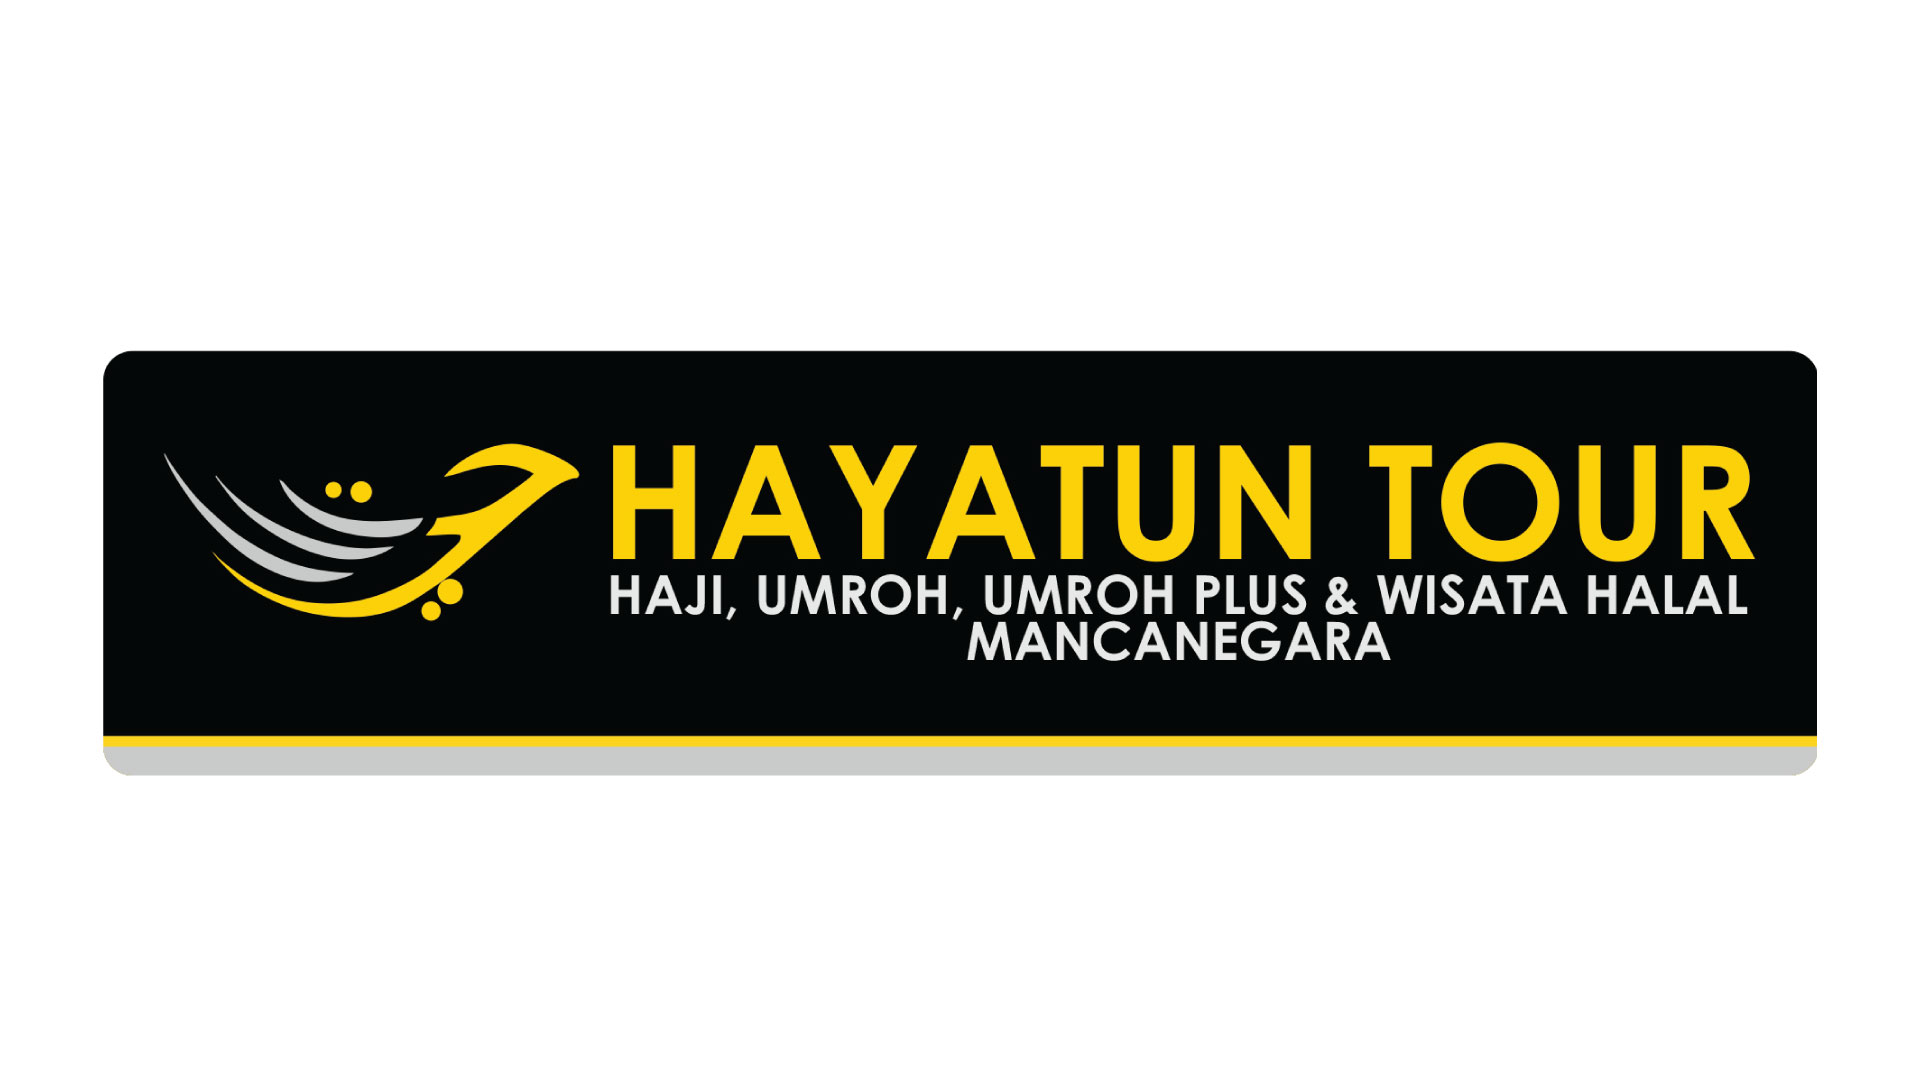 HAYATUN TOUR